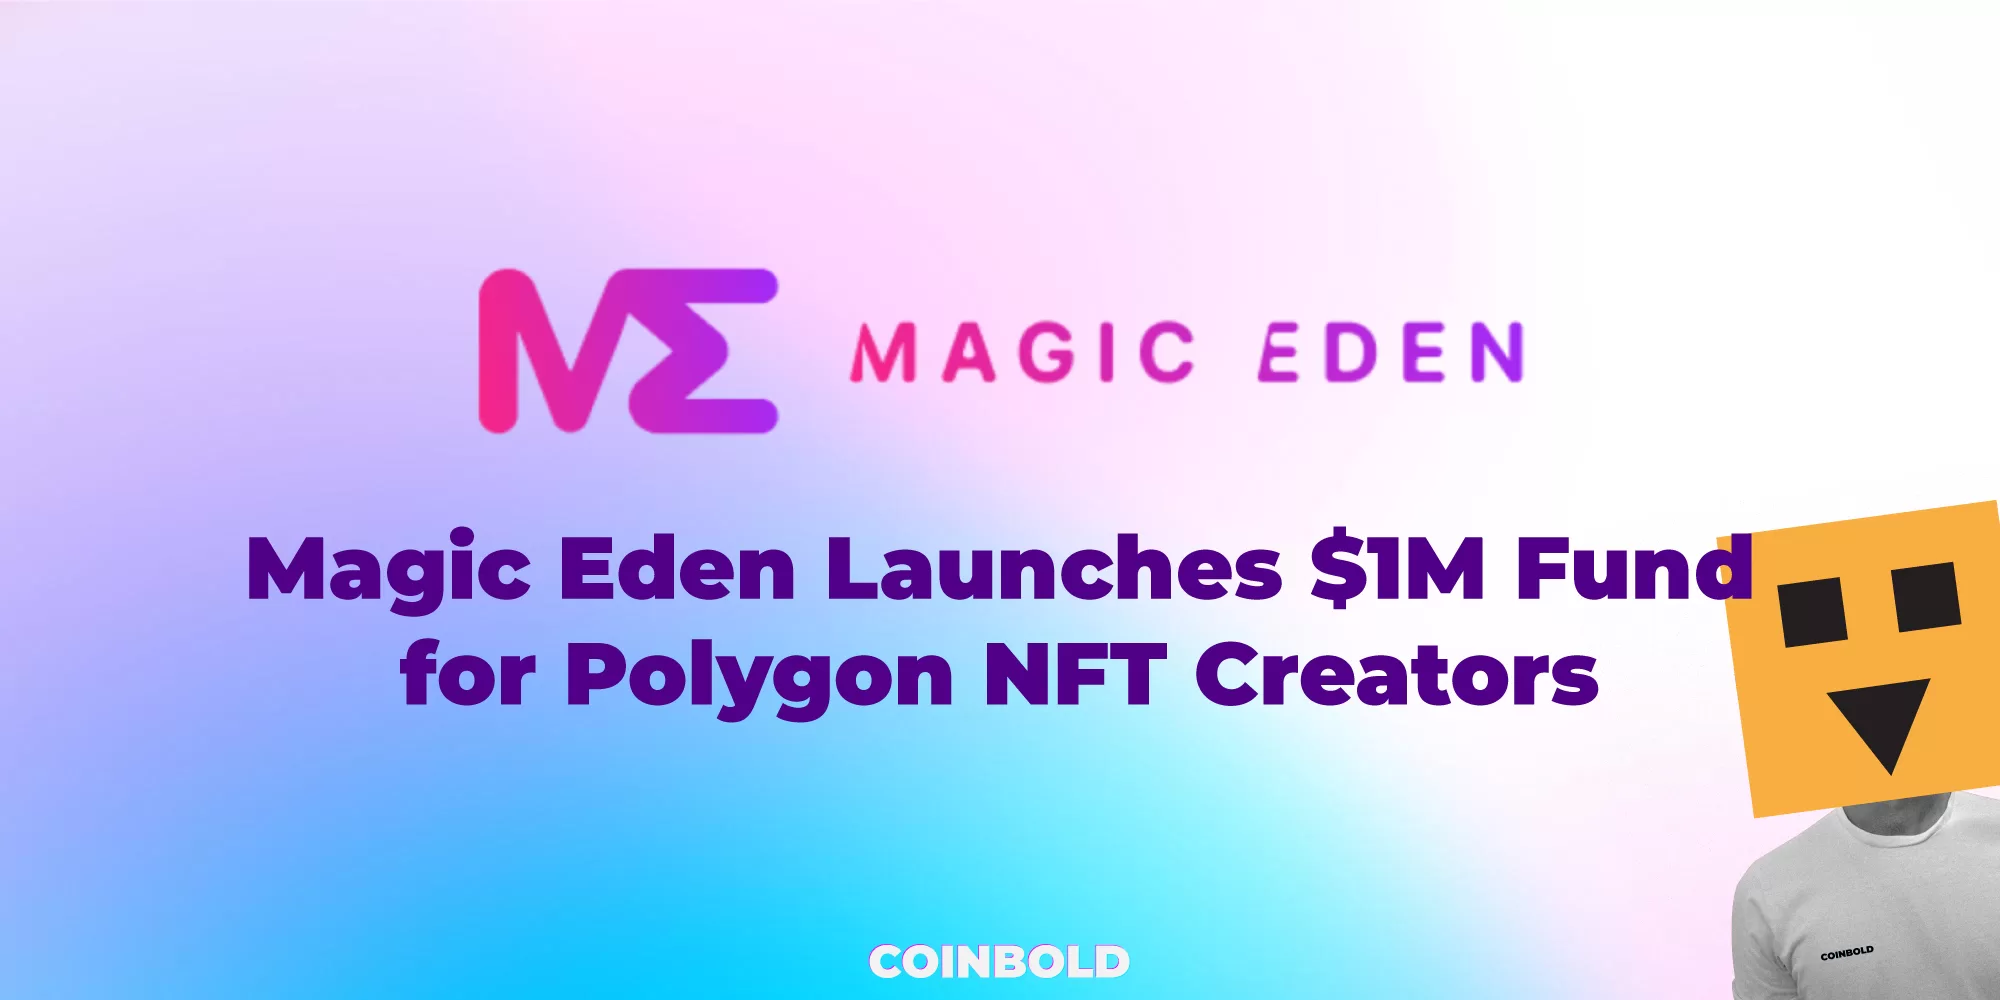 Magic Eden Launches $1M Fund for Polygon NFT Creators